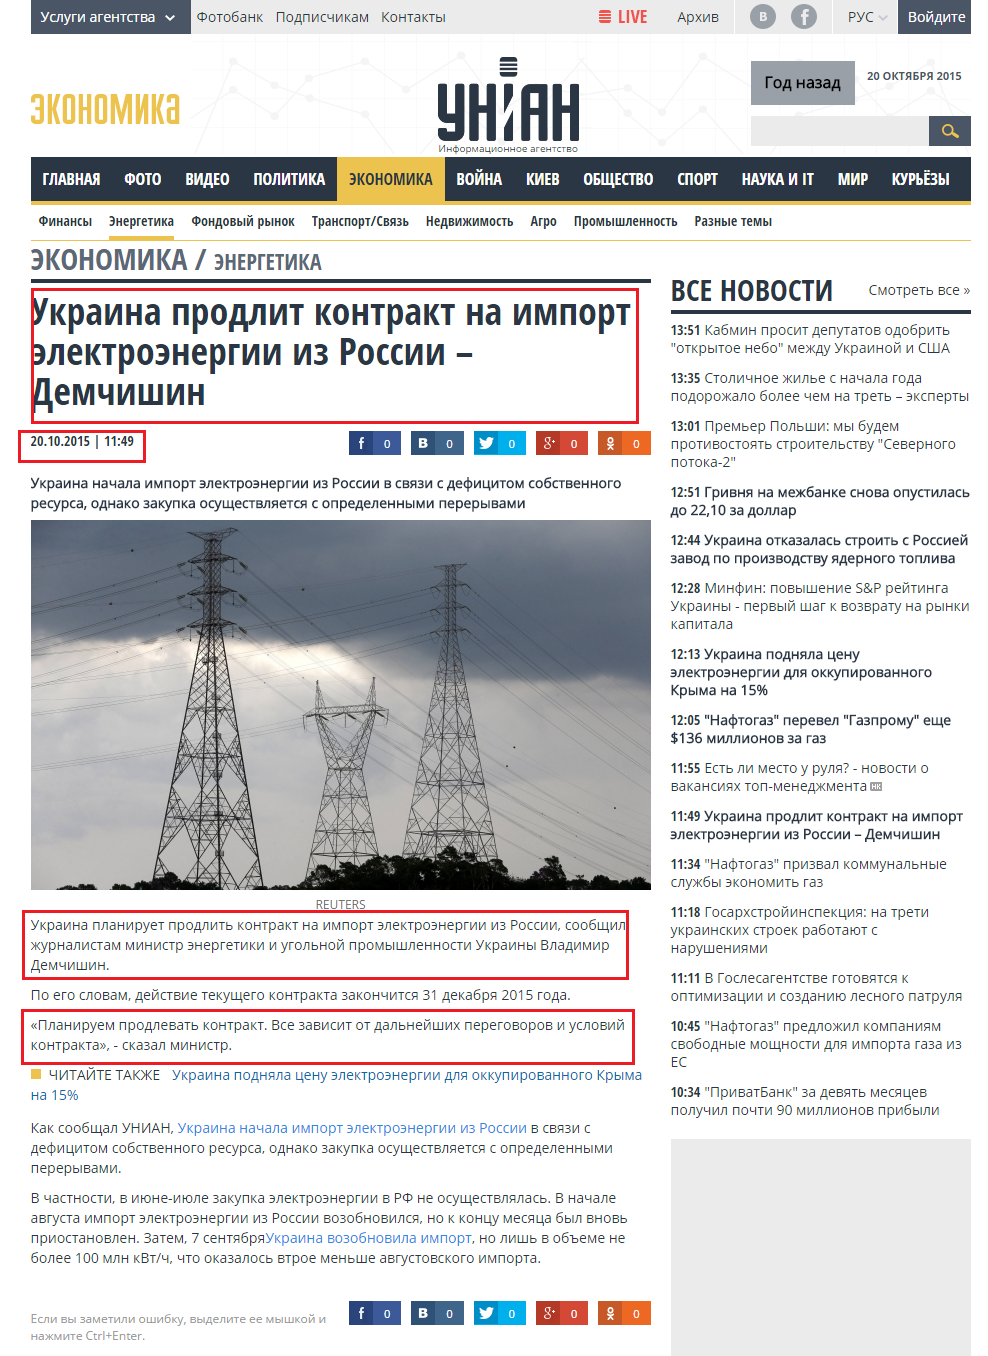 http://economics.unian.net/energetics/1157410-ukraina-planiruet-prodlit-kontrakt-na-import-elektroenergii-iz-rossii-demchishin.html